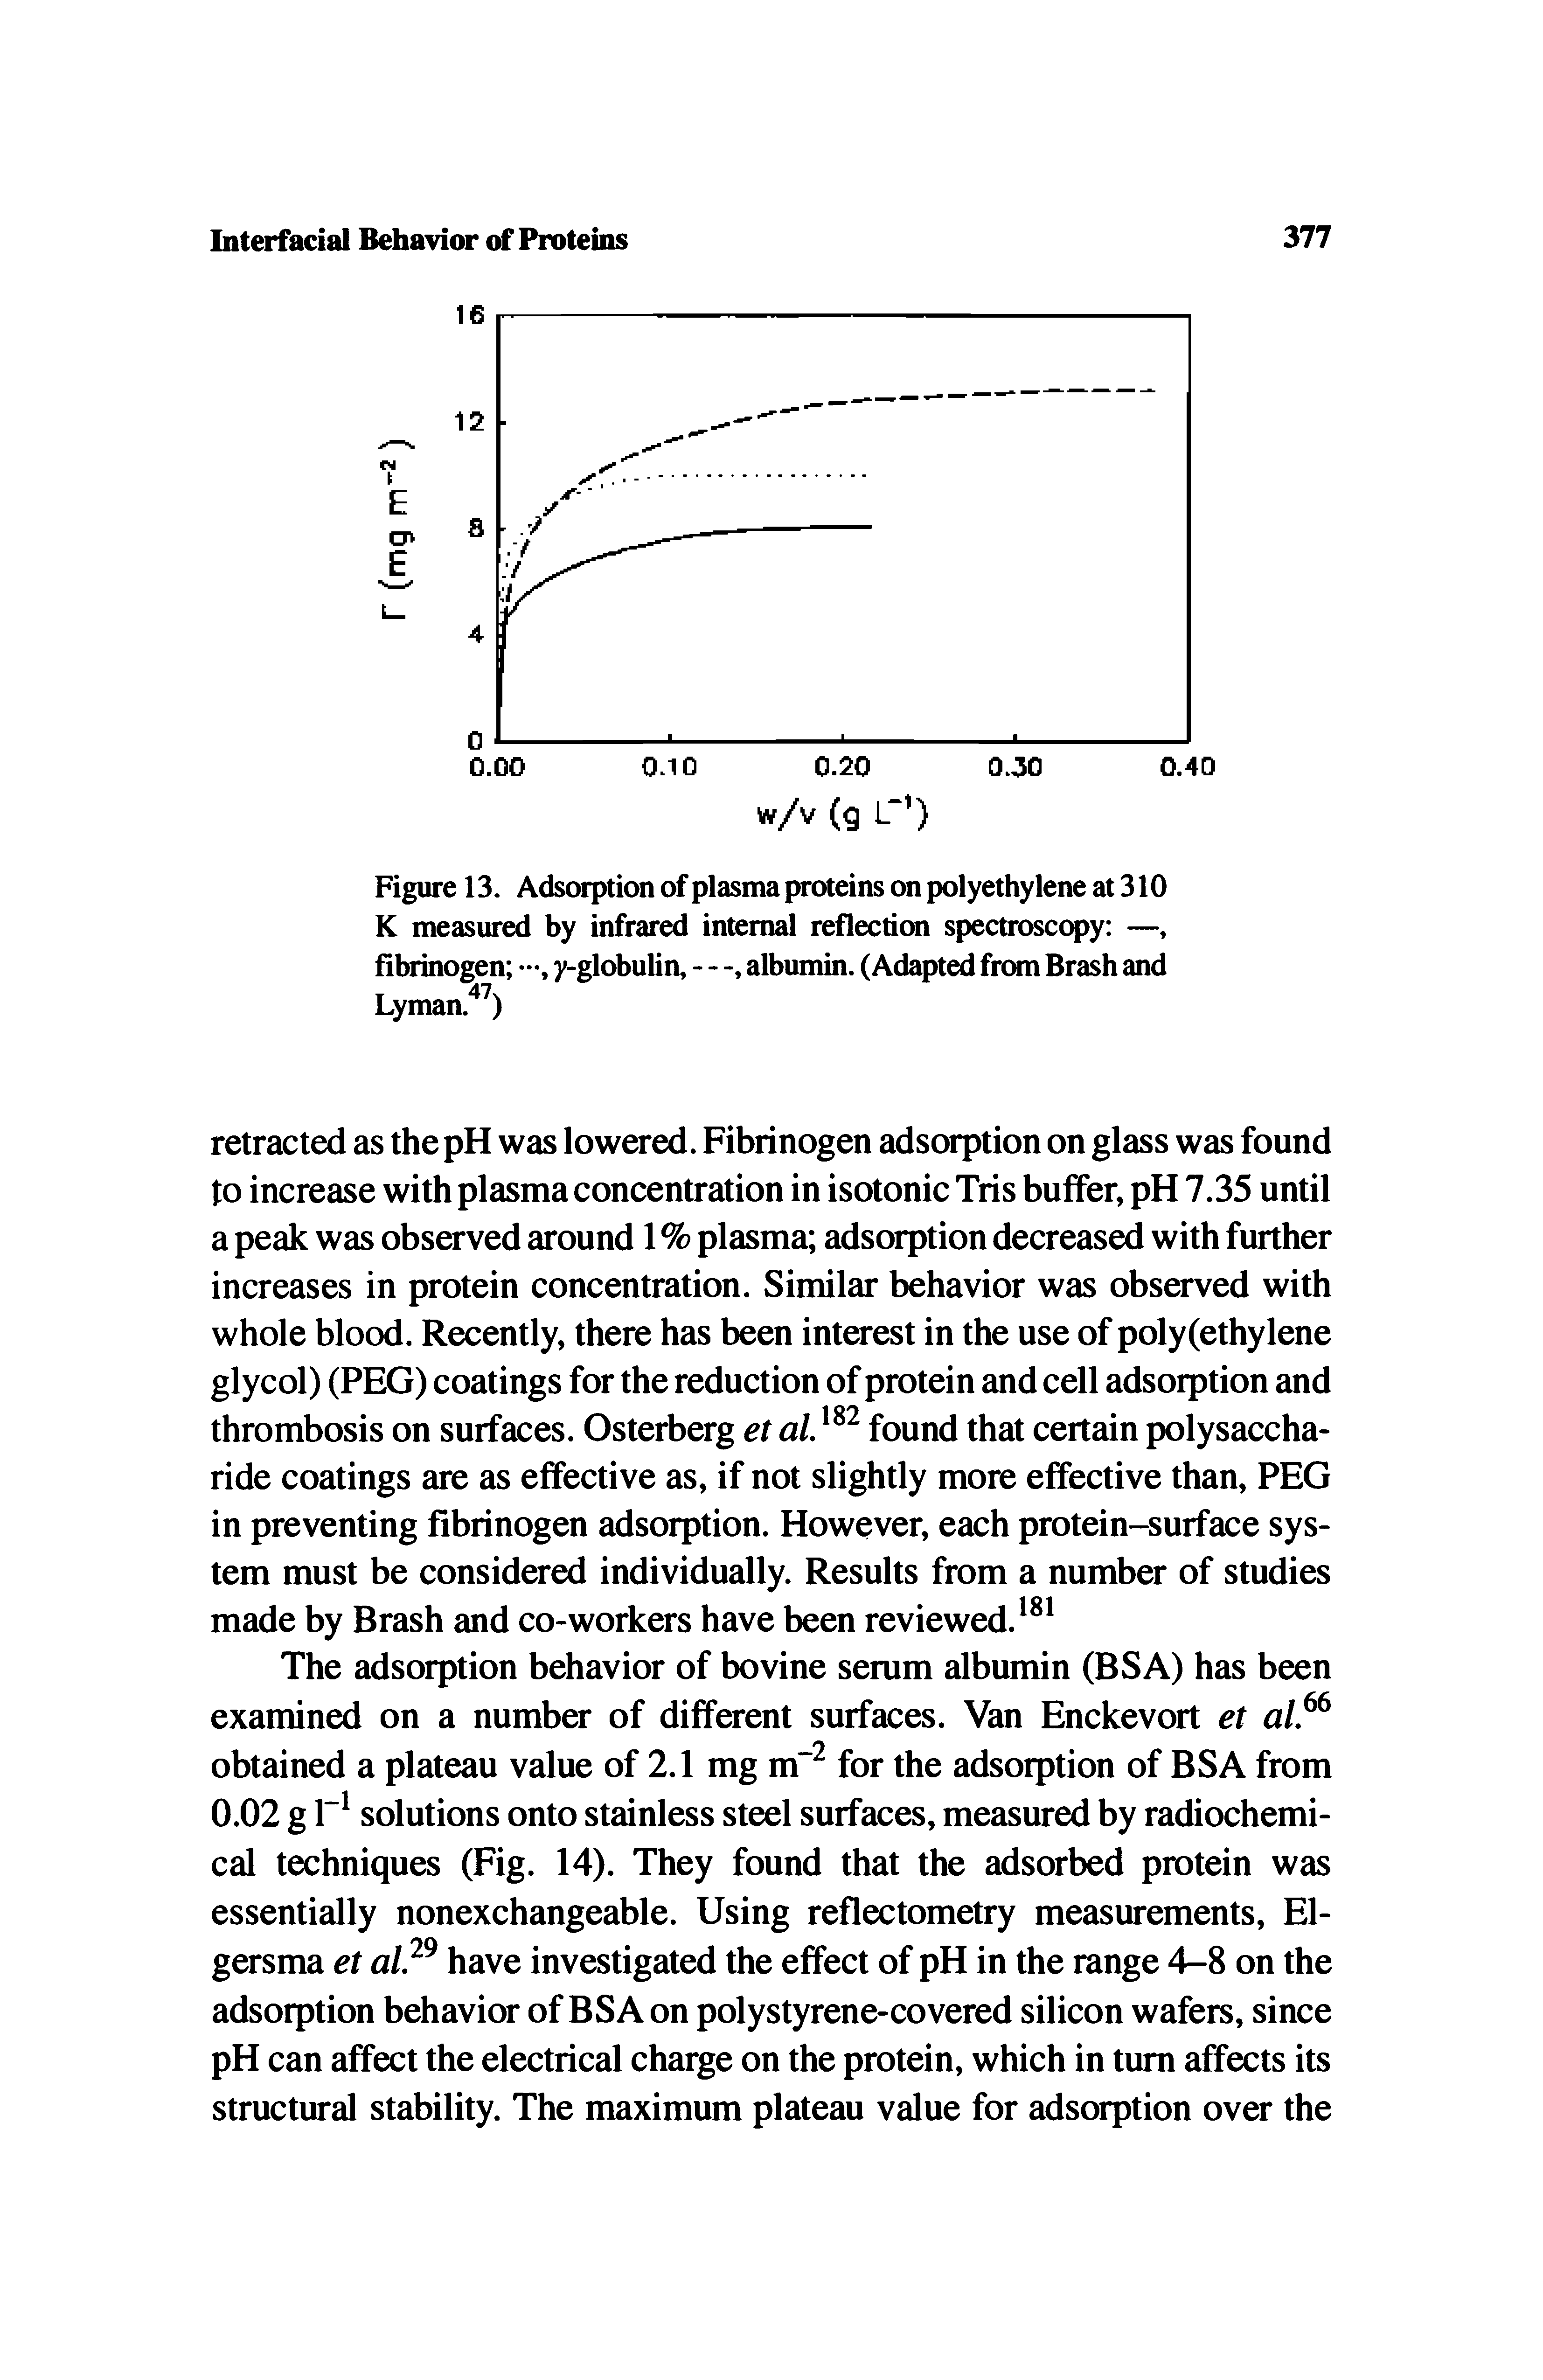 Figure 13. Adsorption of plasma proteins on polyethylene at 310 K measured by infrared internal reflection spectroscopy —, fibrinogen —, y-globulin, - - albumin. (Adapted from Brash and Lyman. )...